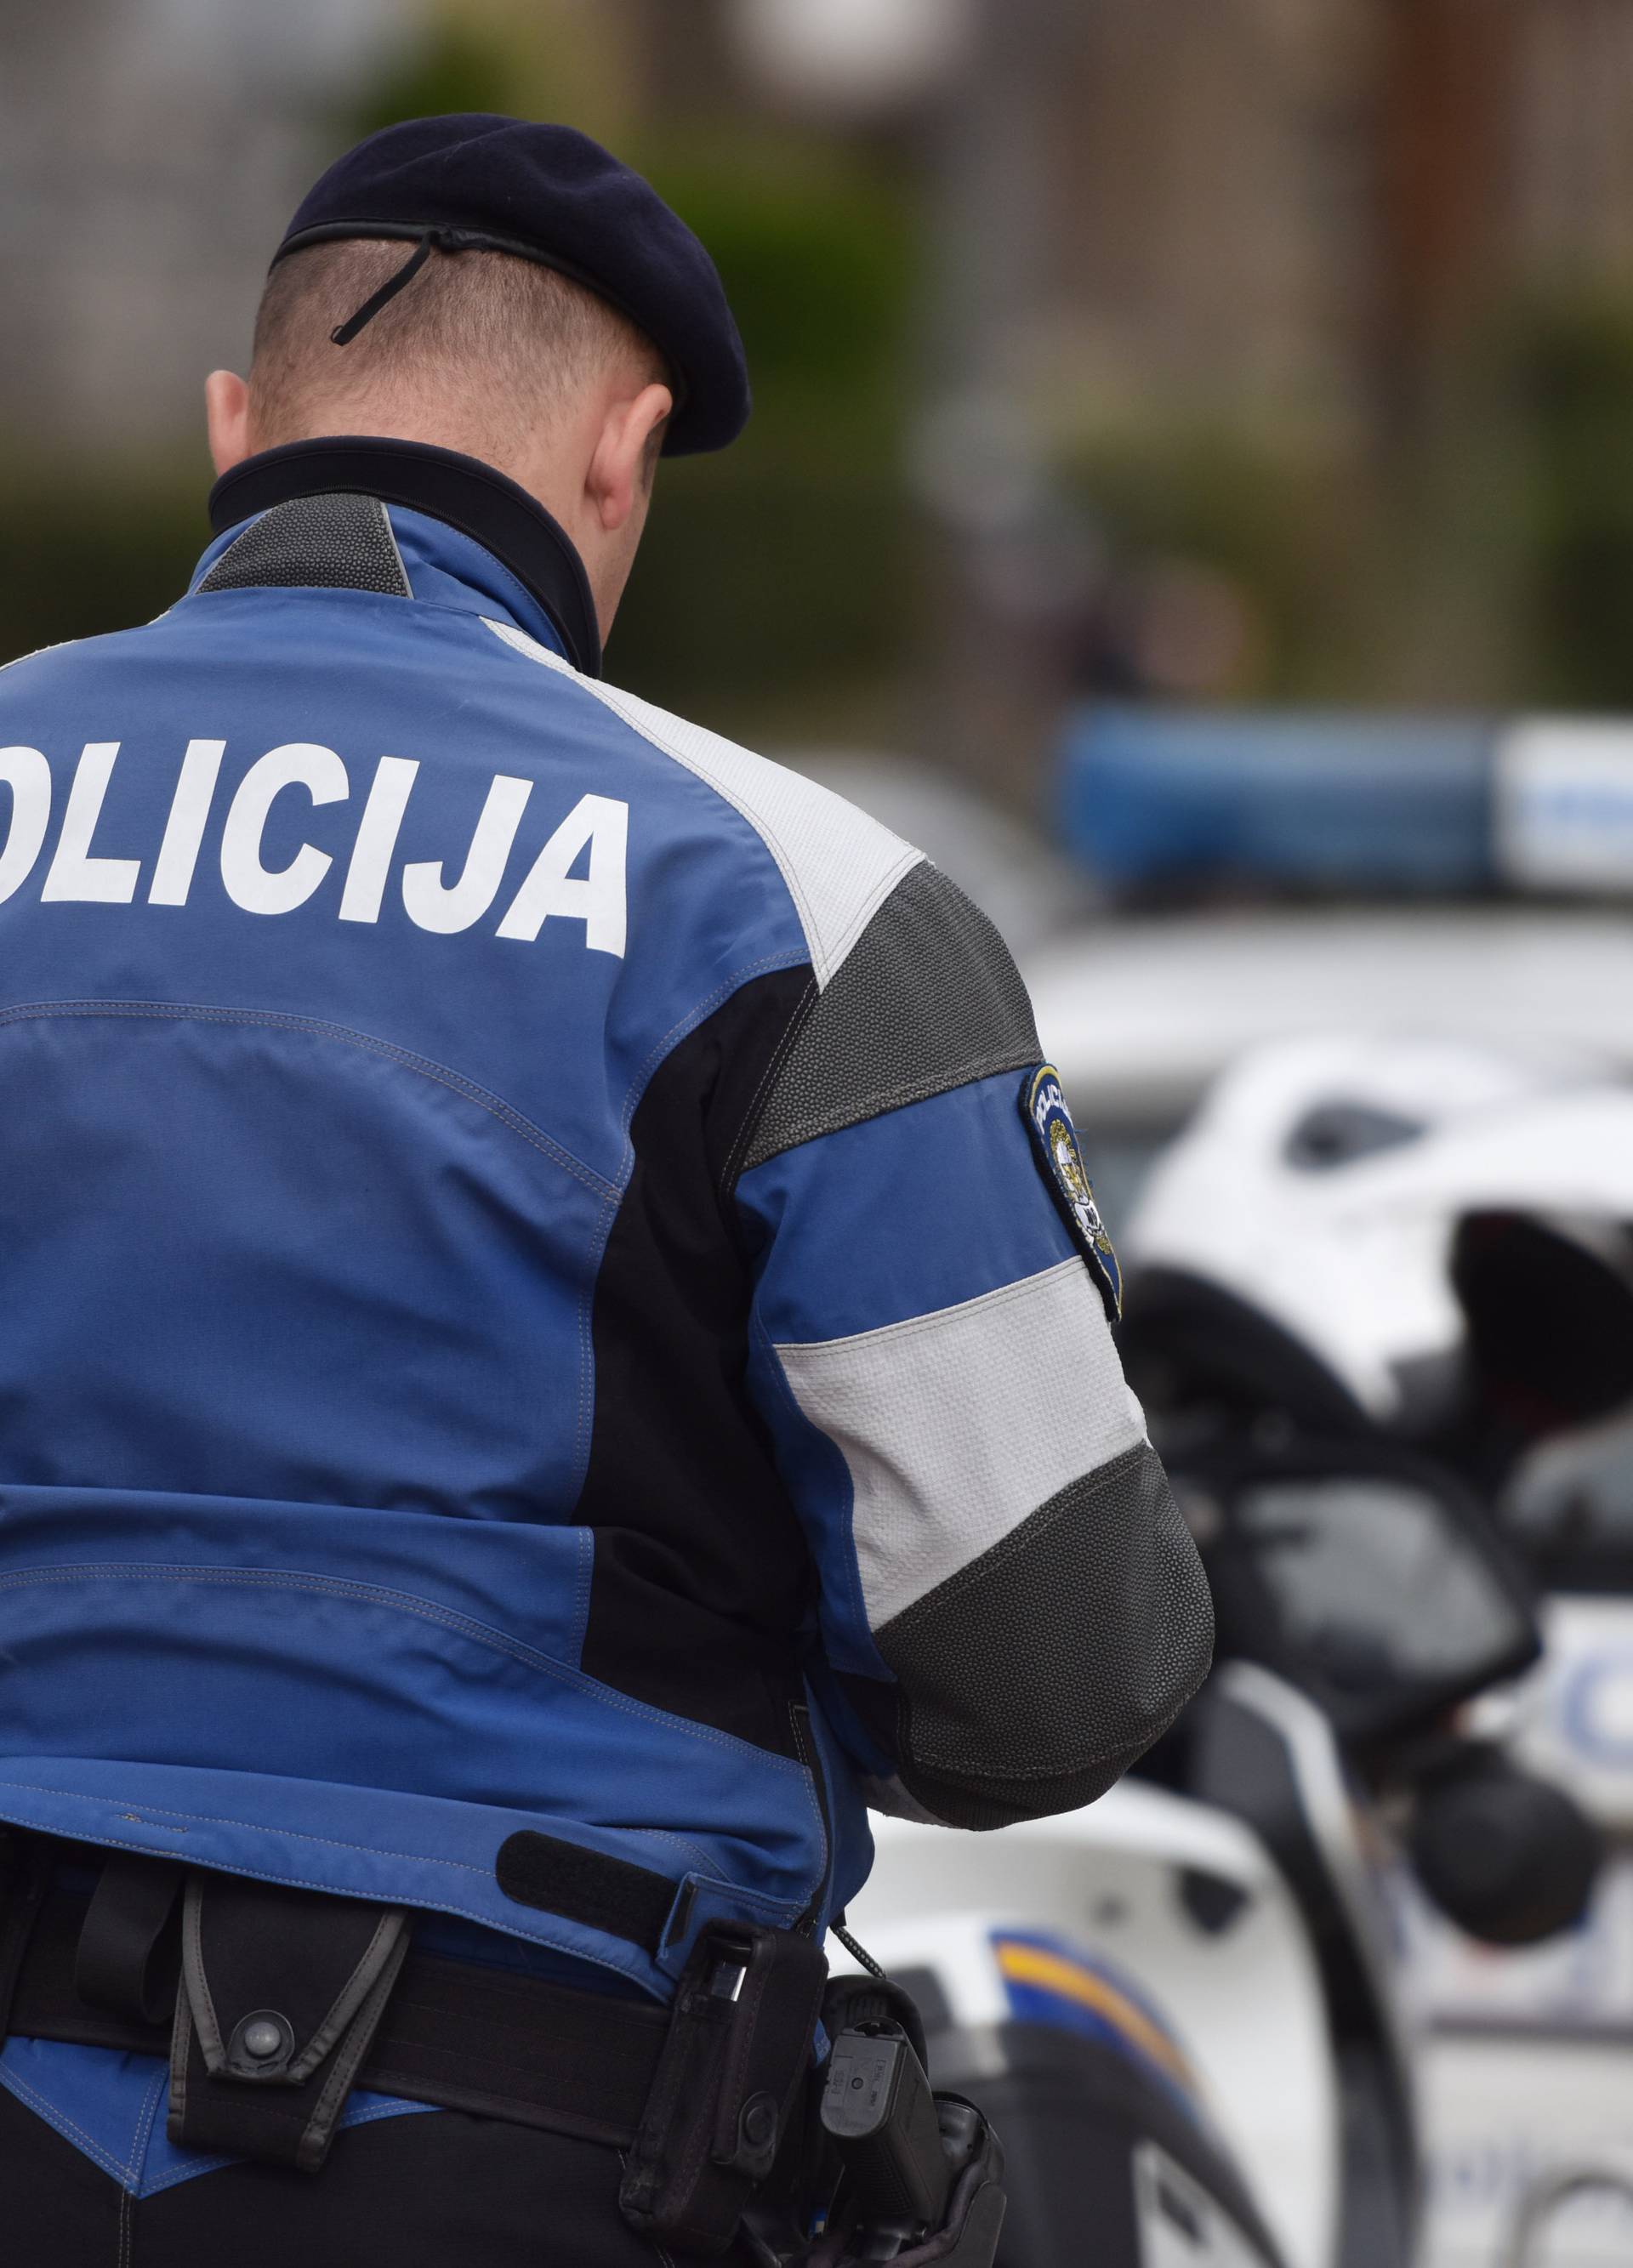 Mladić (19) motociklom sletio s ceste kod Šibenika i poginuo